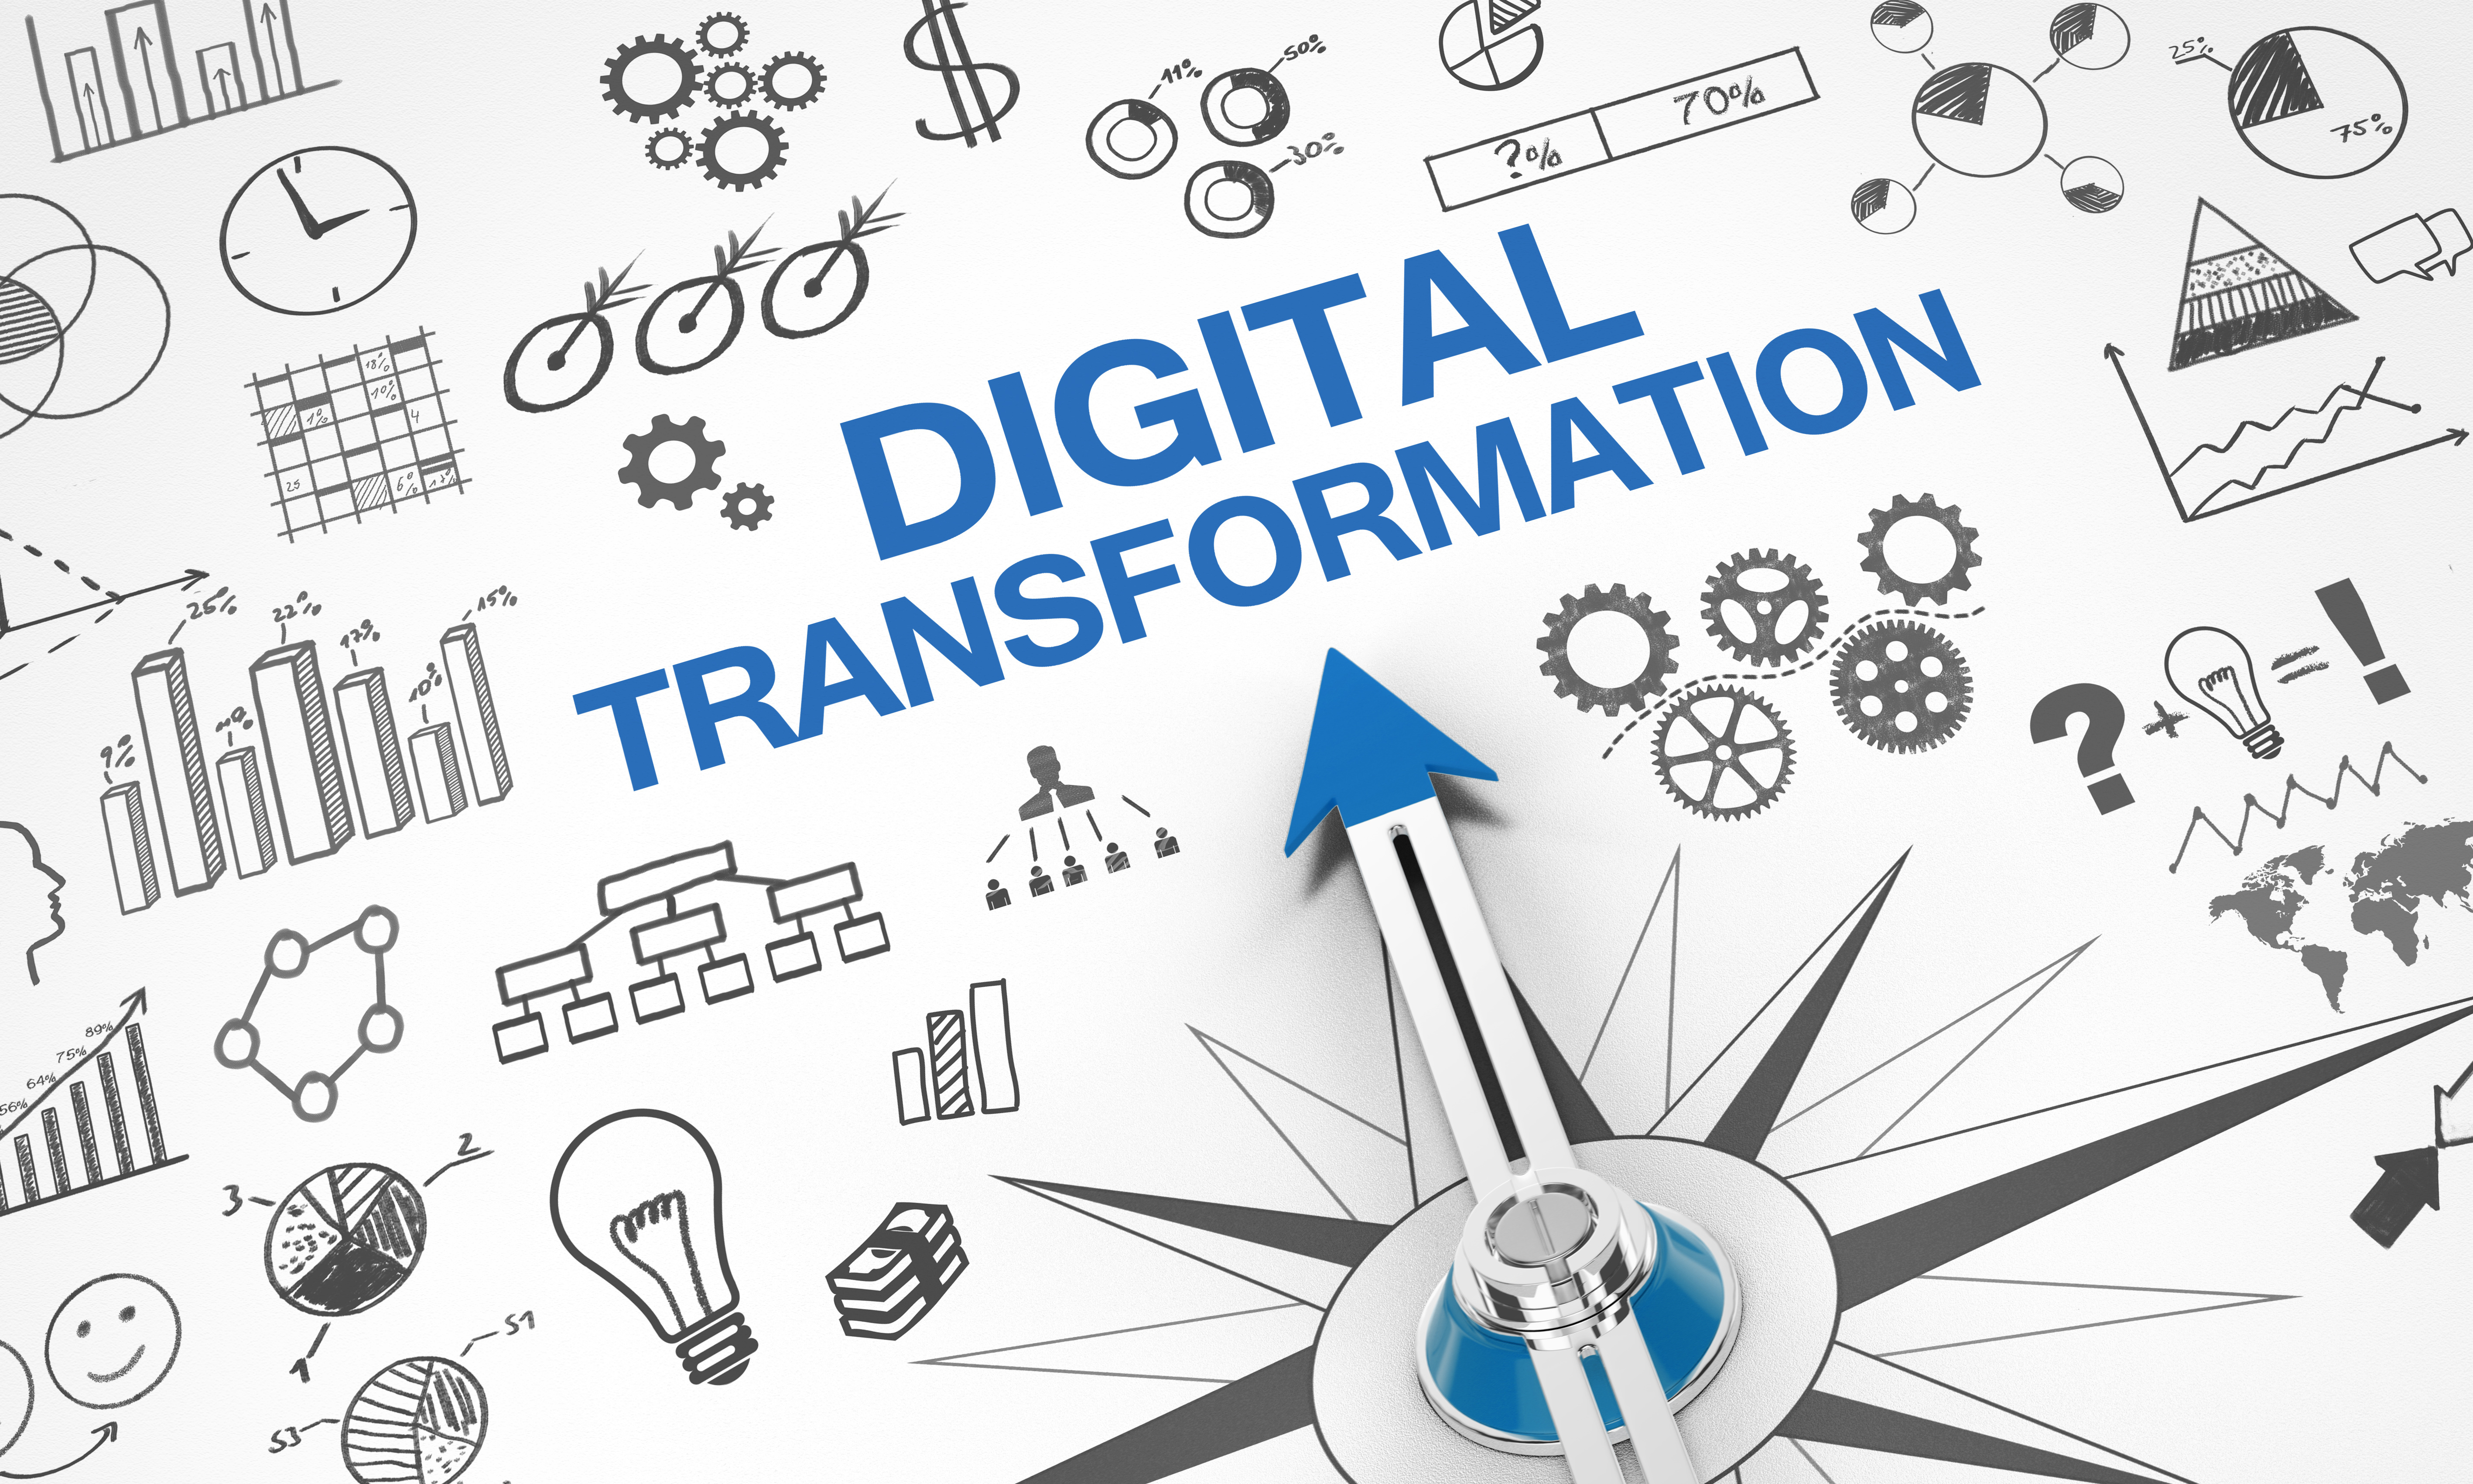 transformation digitale